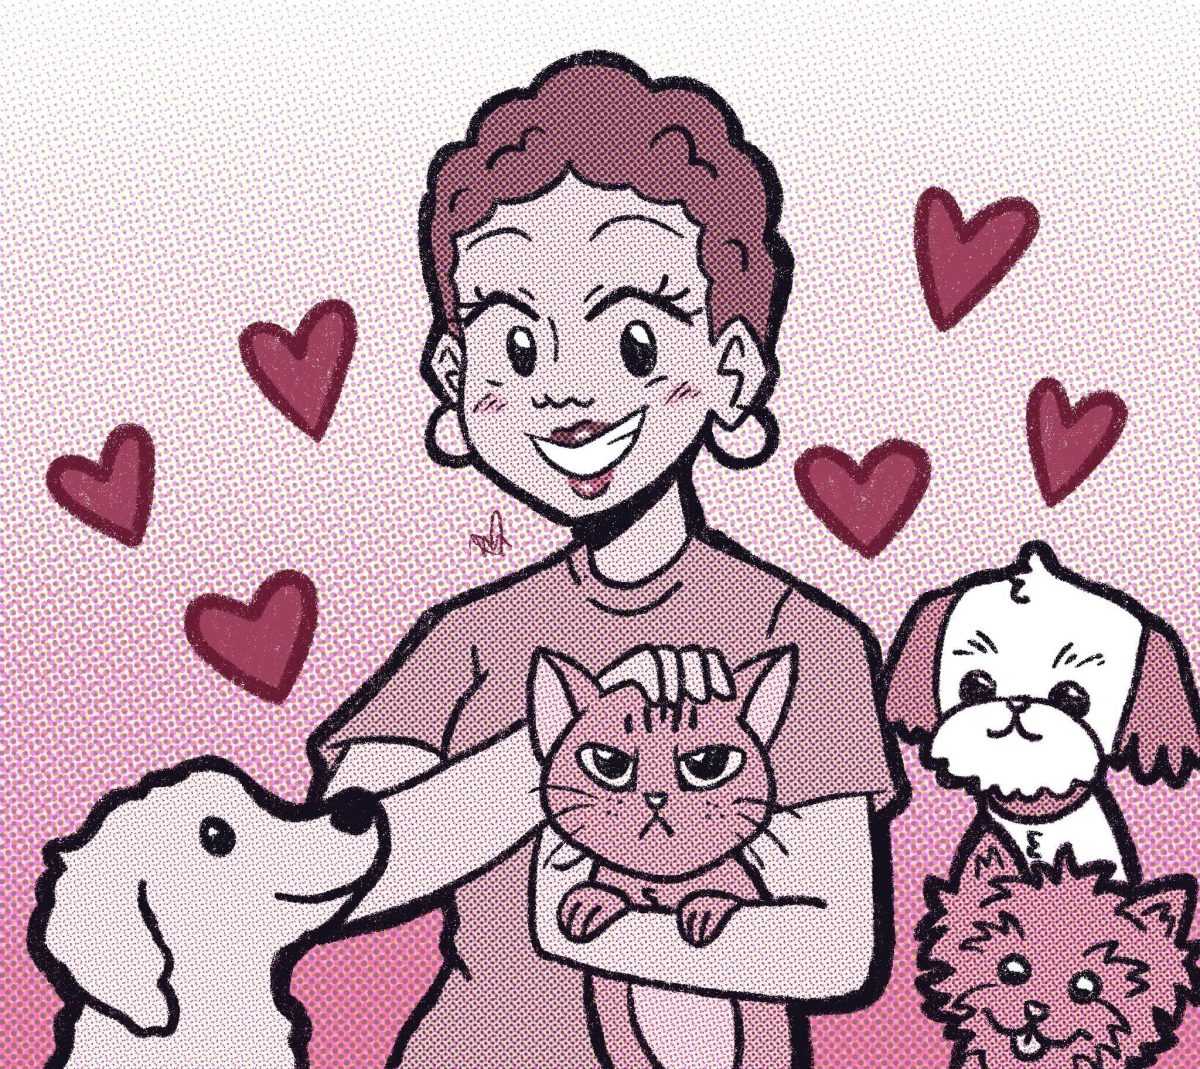 Pets on campus illustration